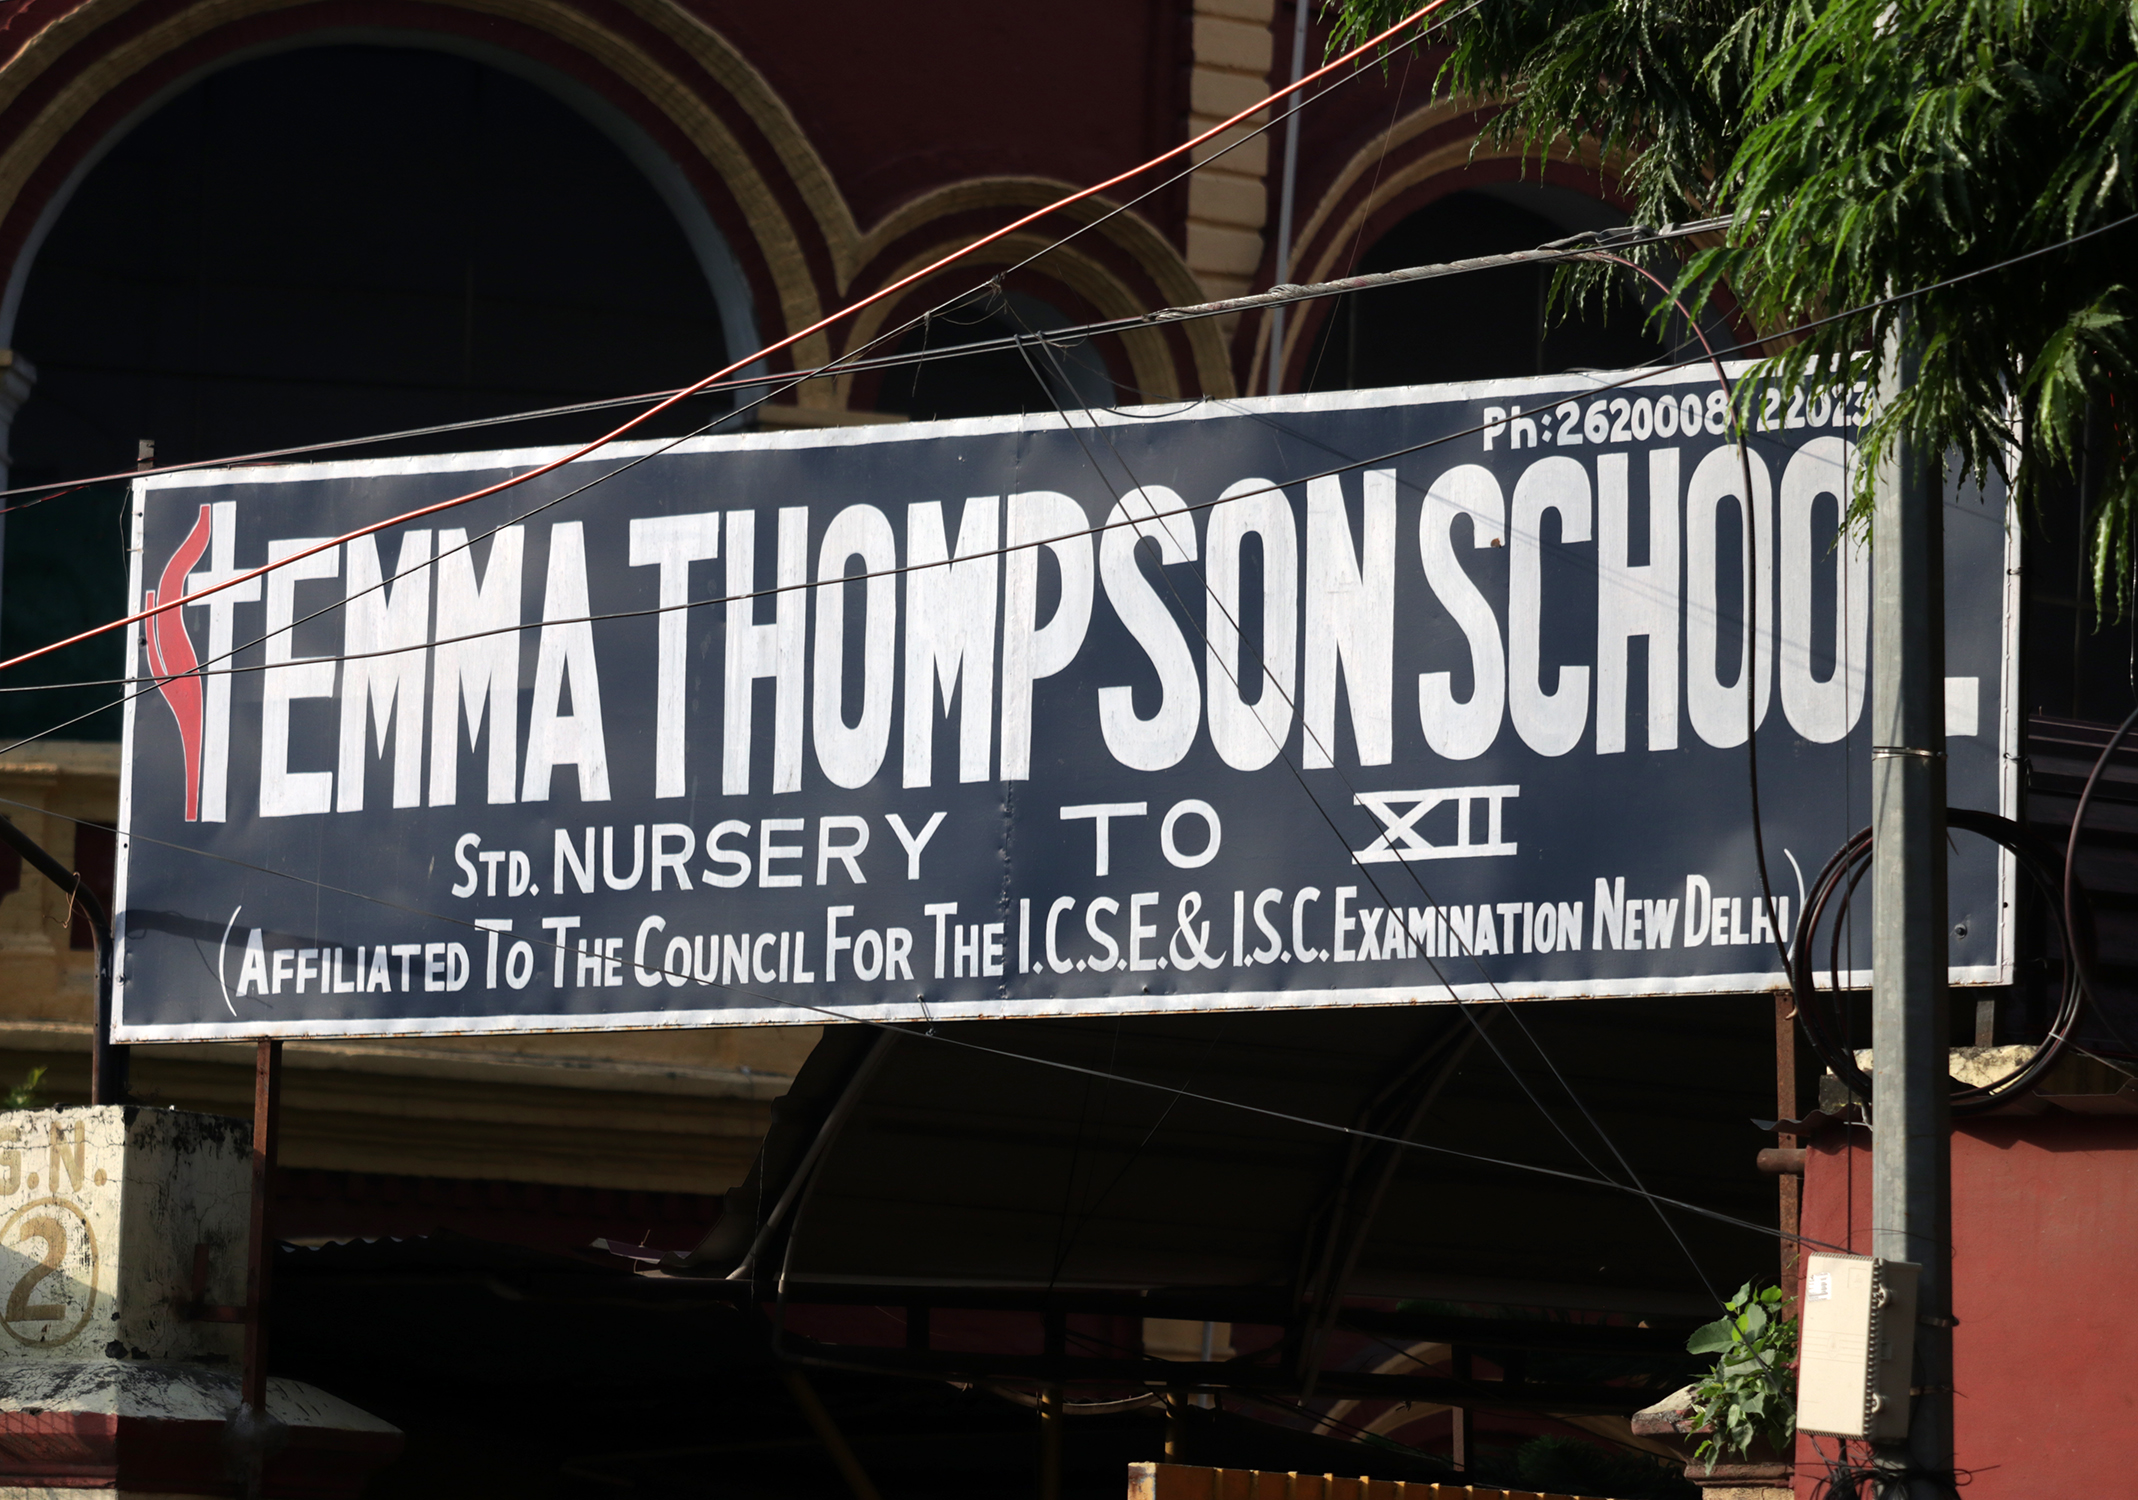 Emma Thomson School